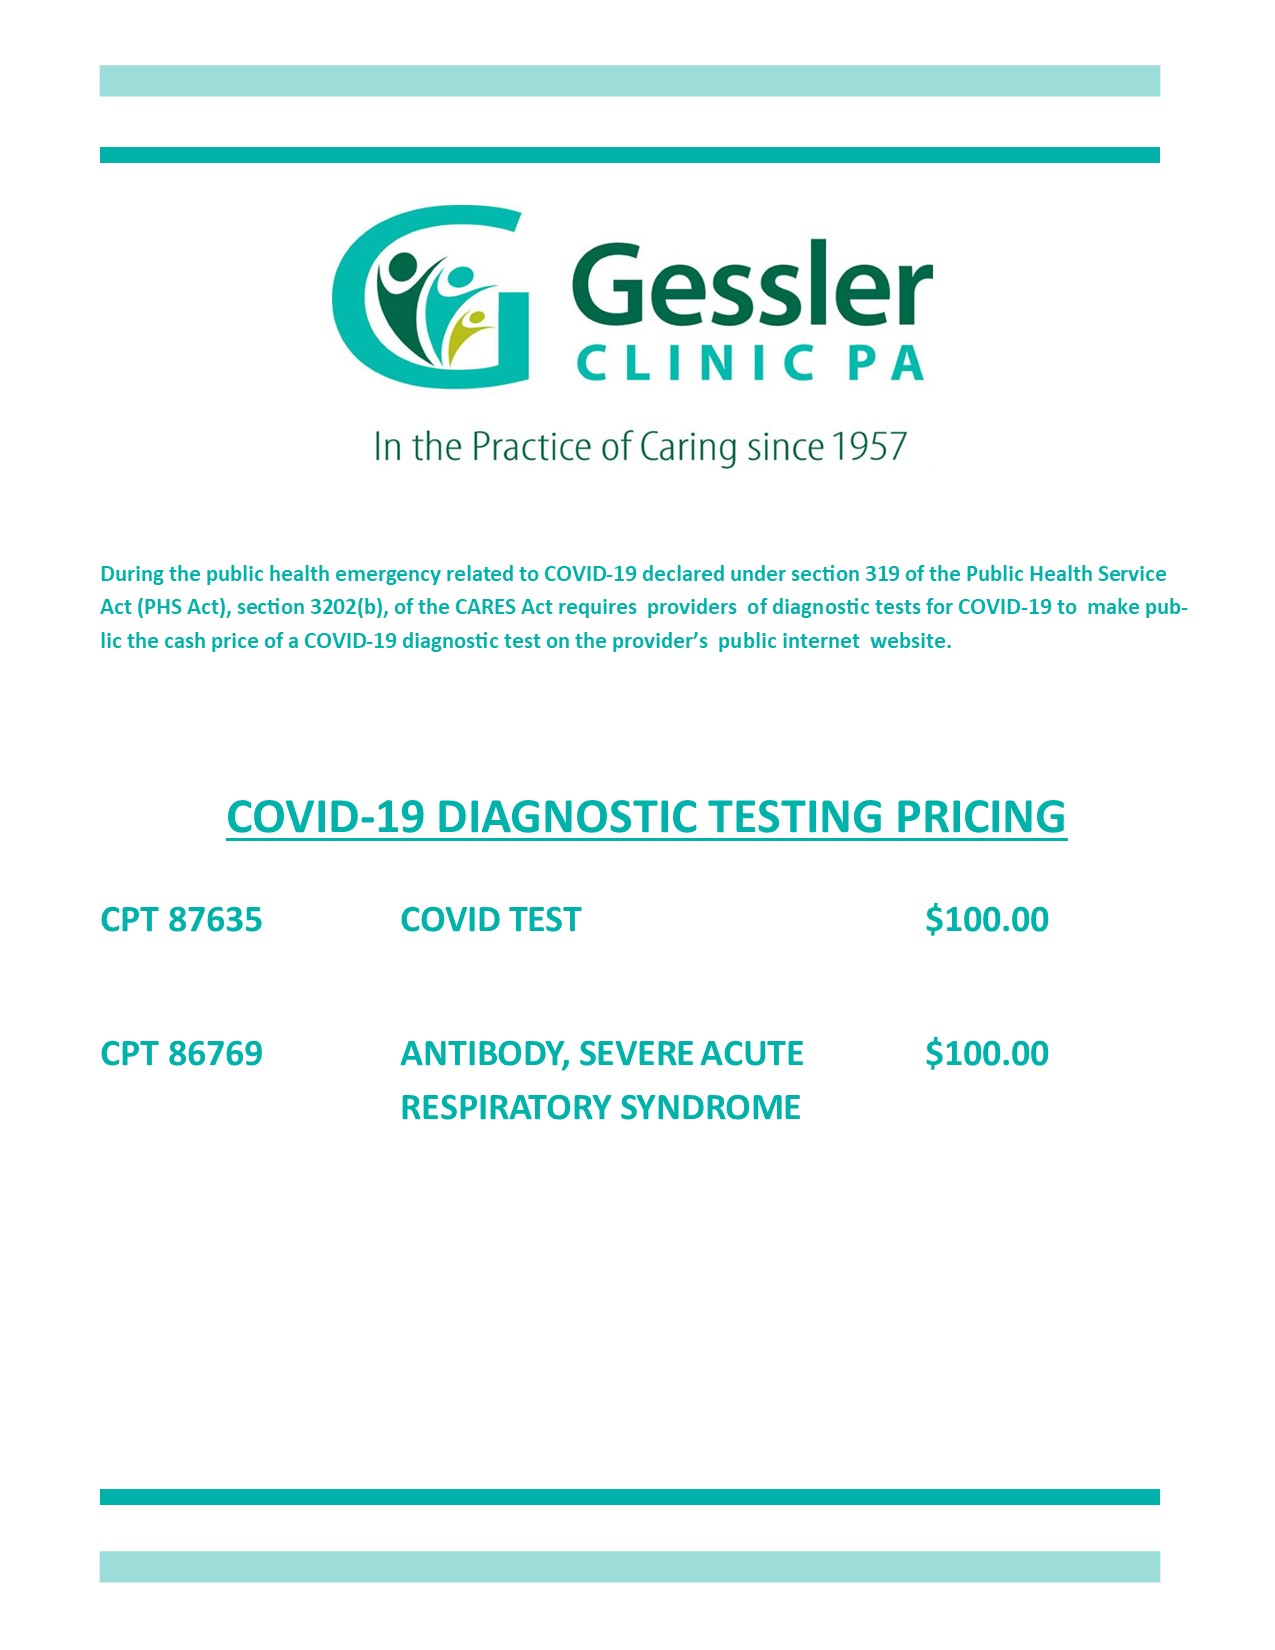 COVID-19 Diagnostic Testing Pricing